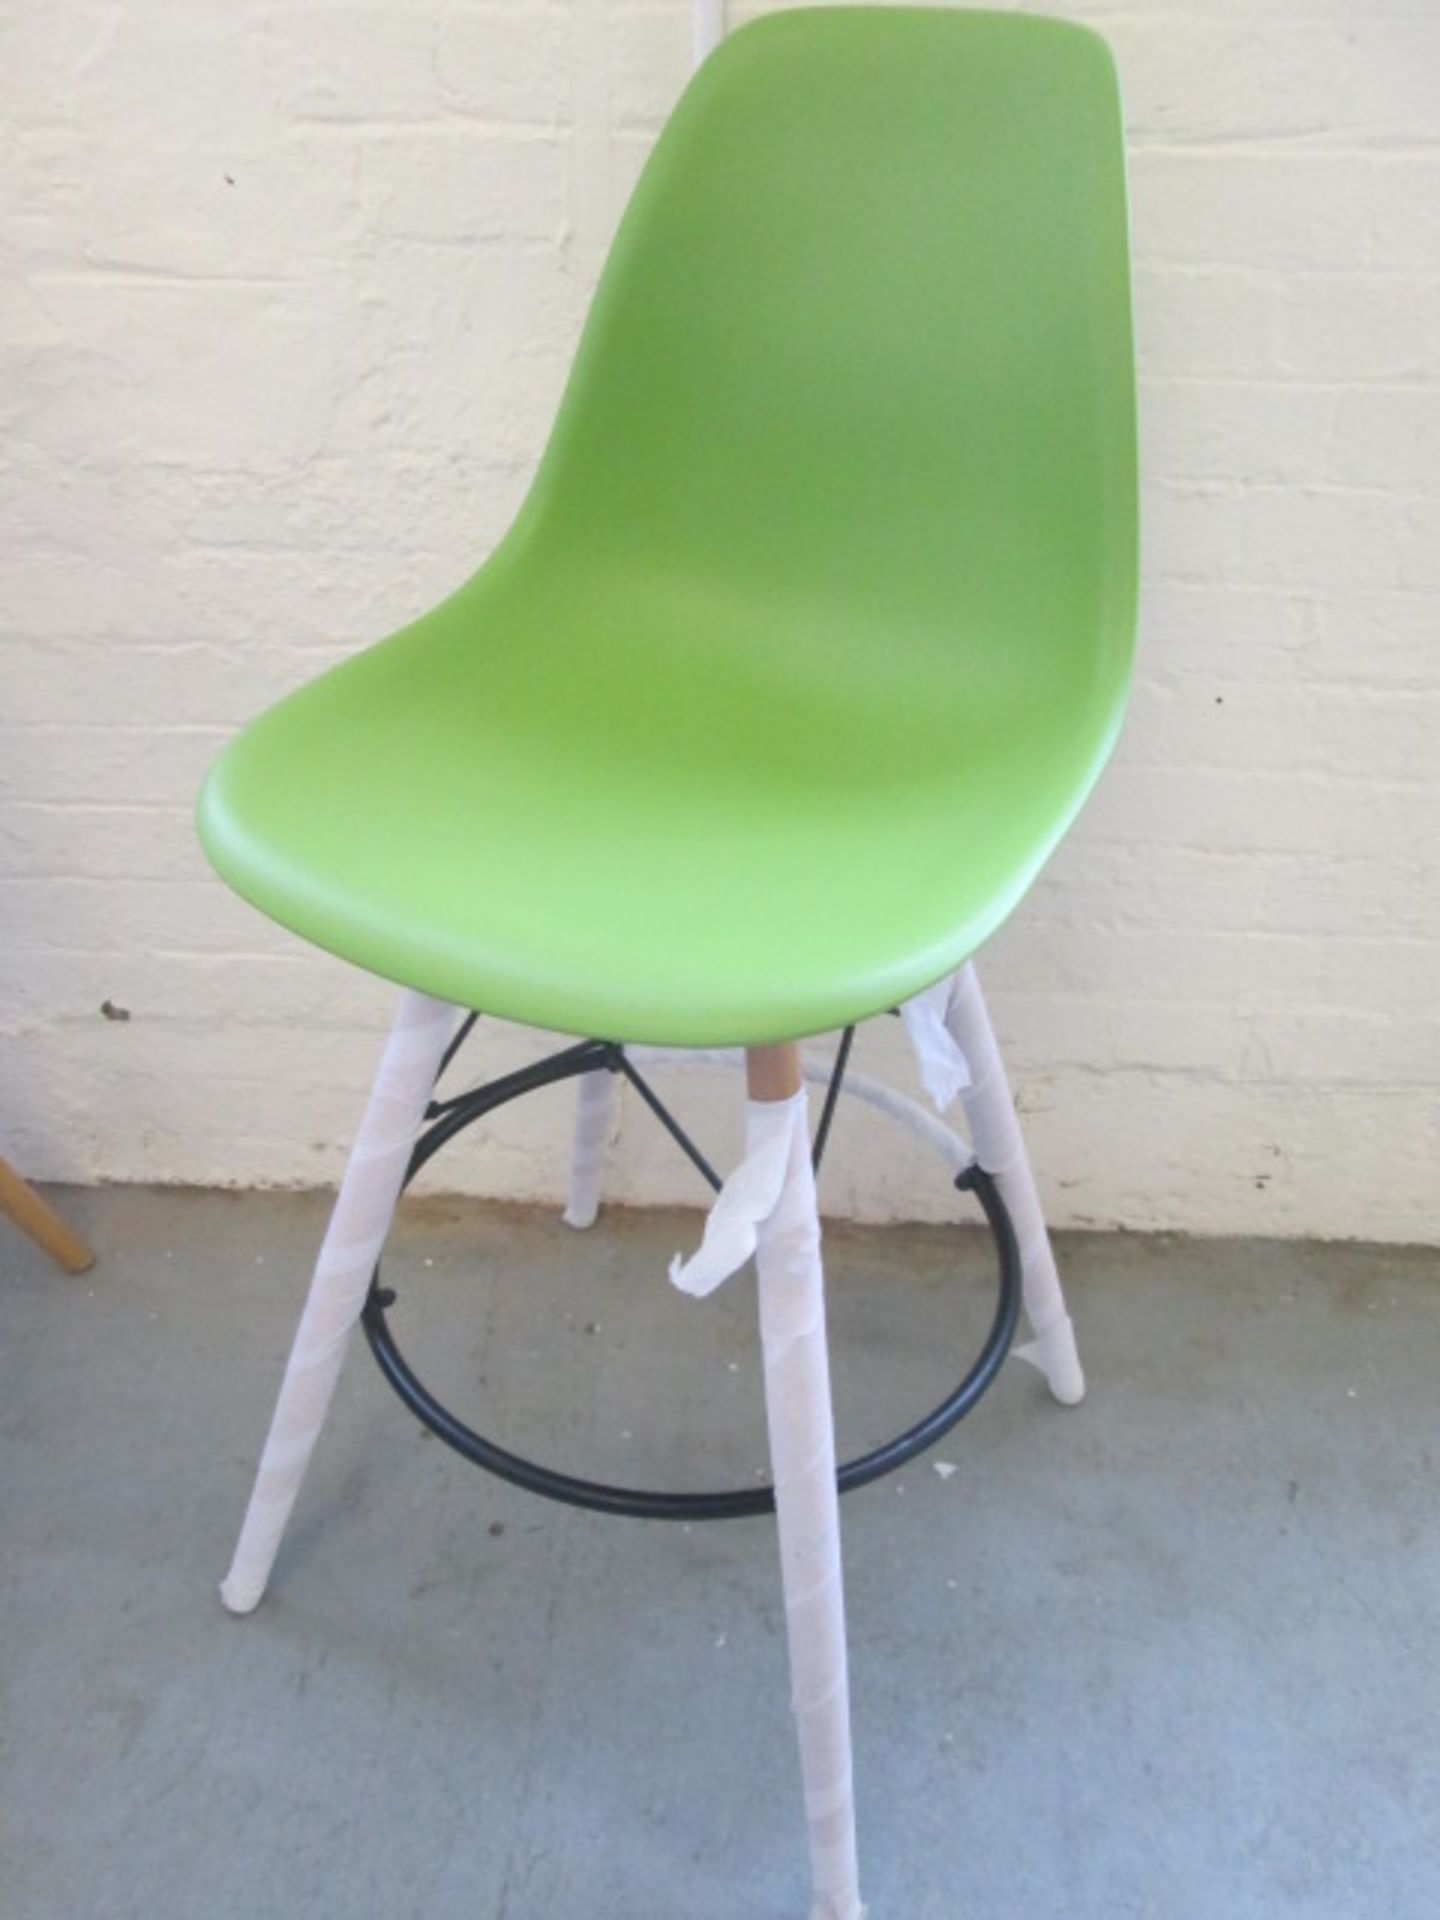 As New: Green DSW Bar Stool in Charles Eames Style in Polypropylene Matt.